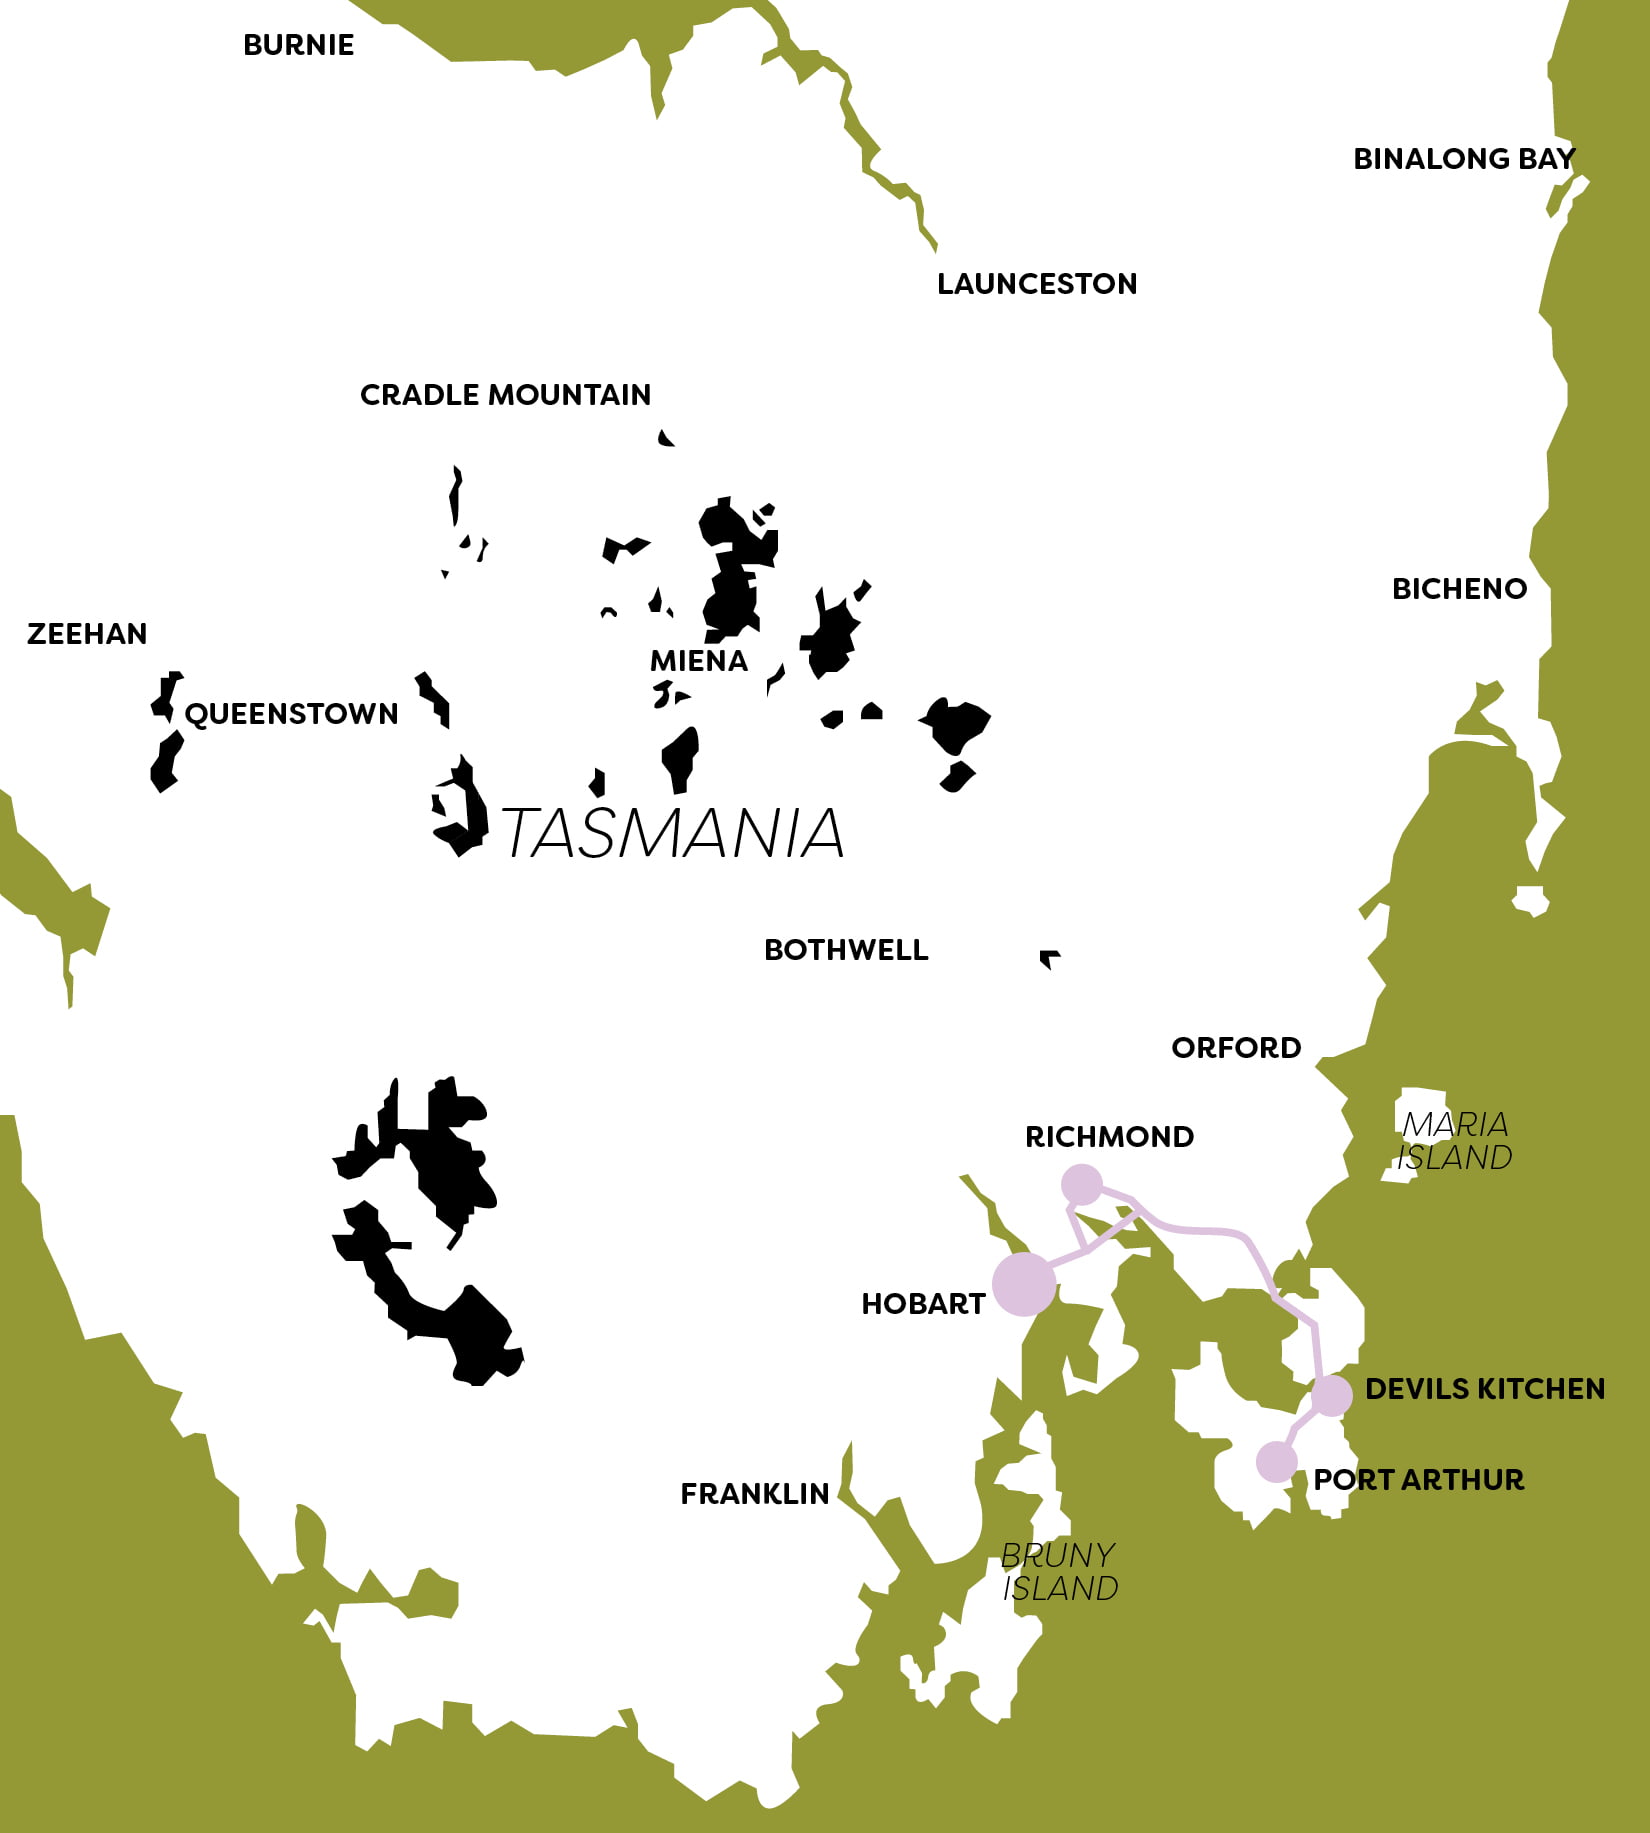 Tasman Peninsula and Richmond Map, showing highlighted destinations, Richmond, Devils Kitchen and Port Arthur.